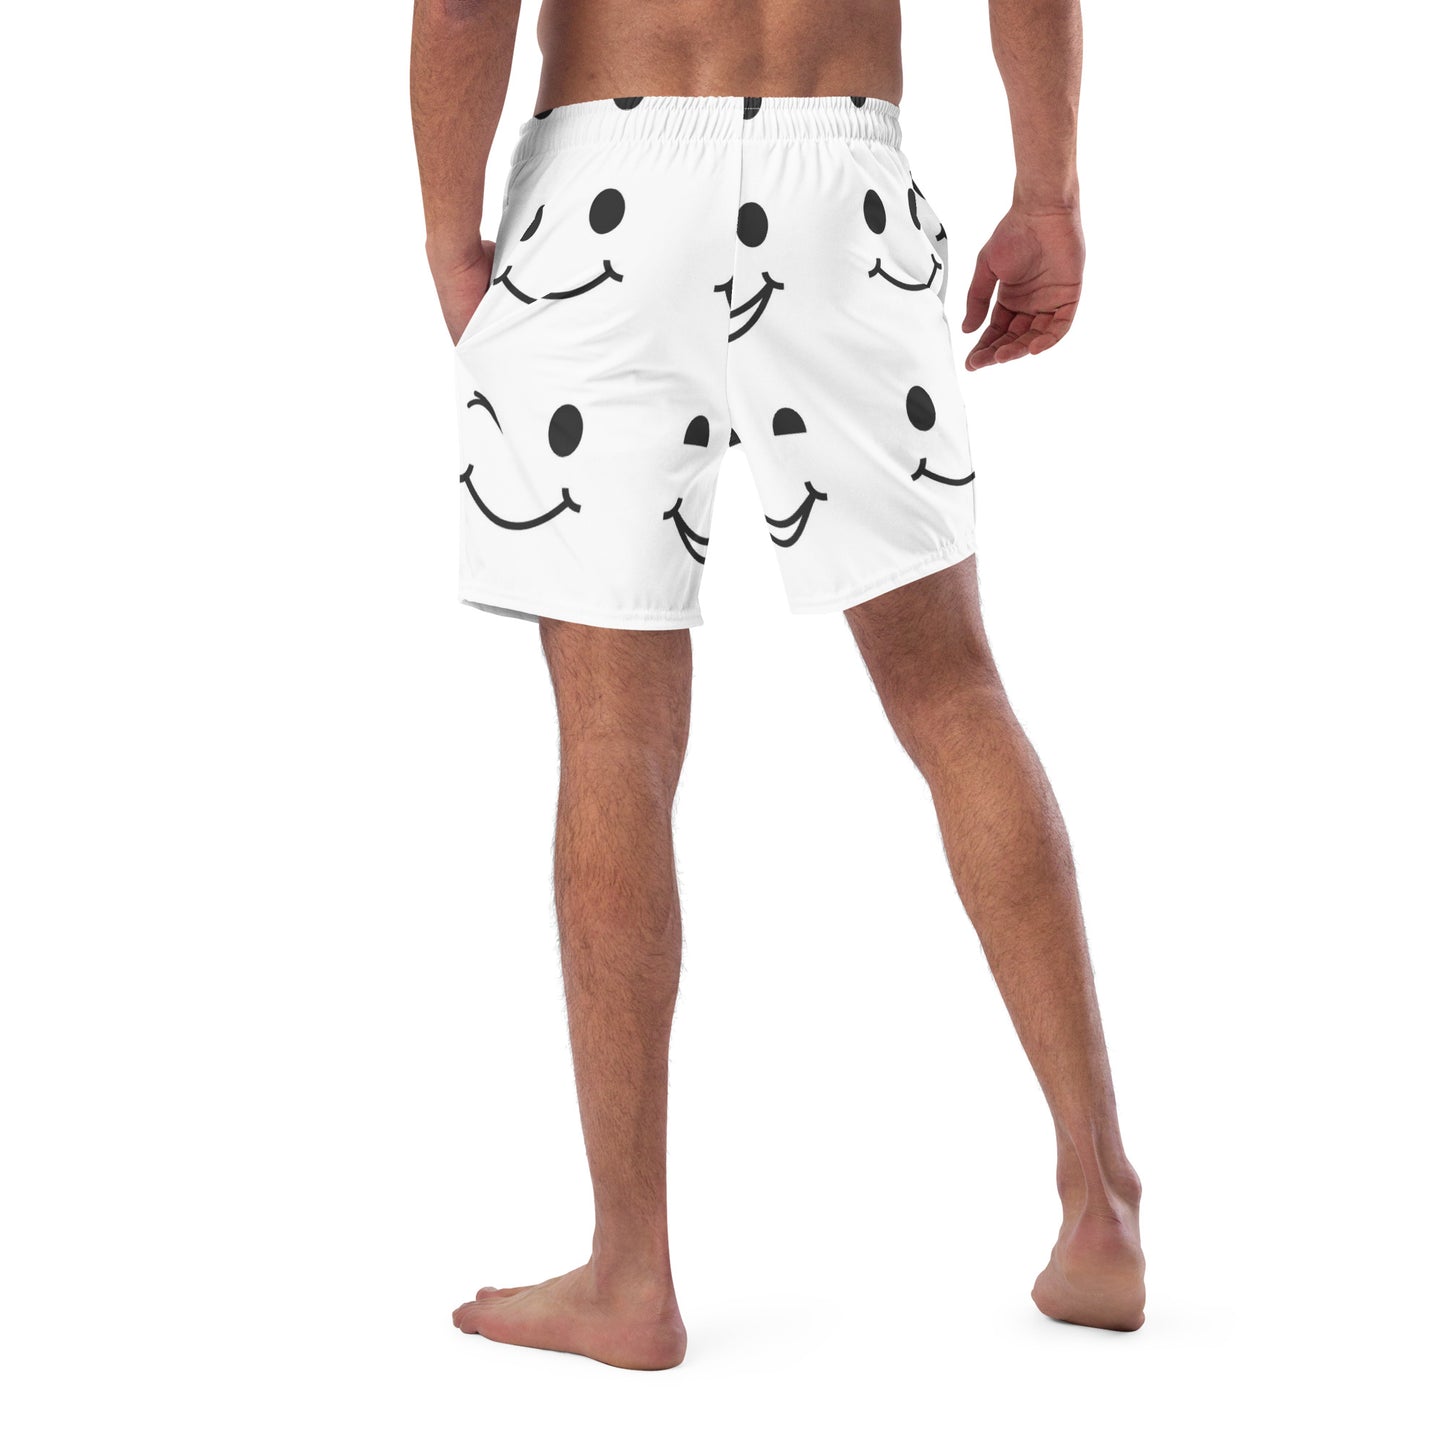 Smiley Men's swim trunks